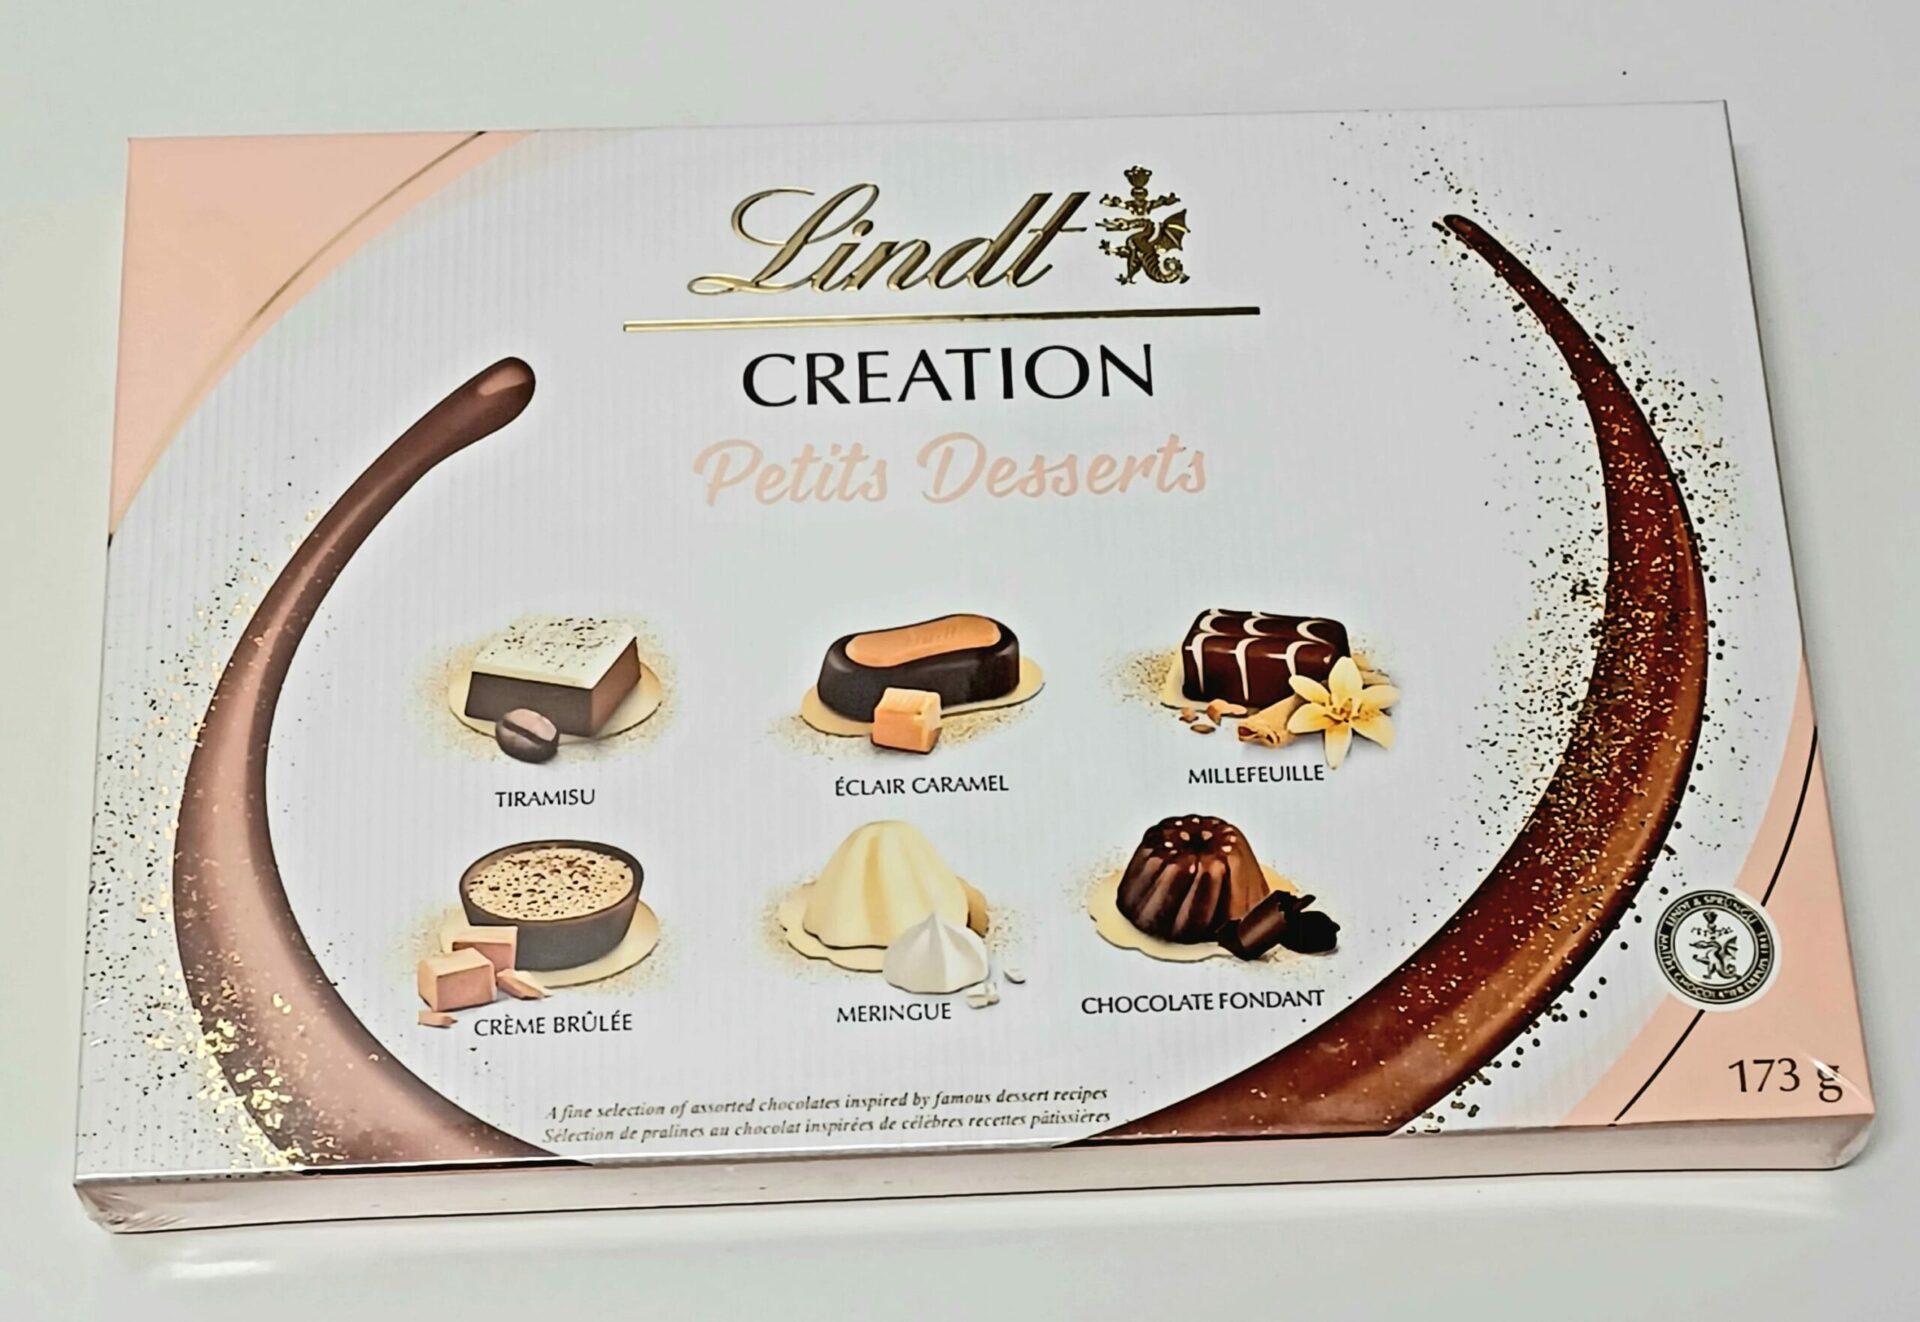 Lindt Creation Petits Desserts 173g